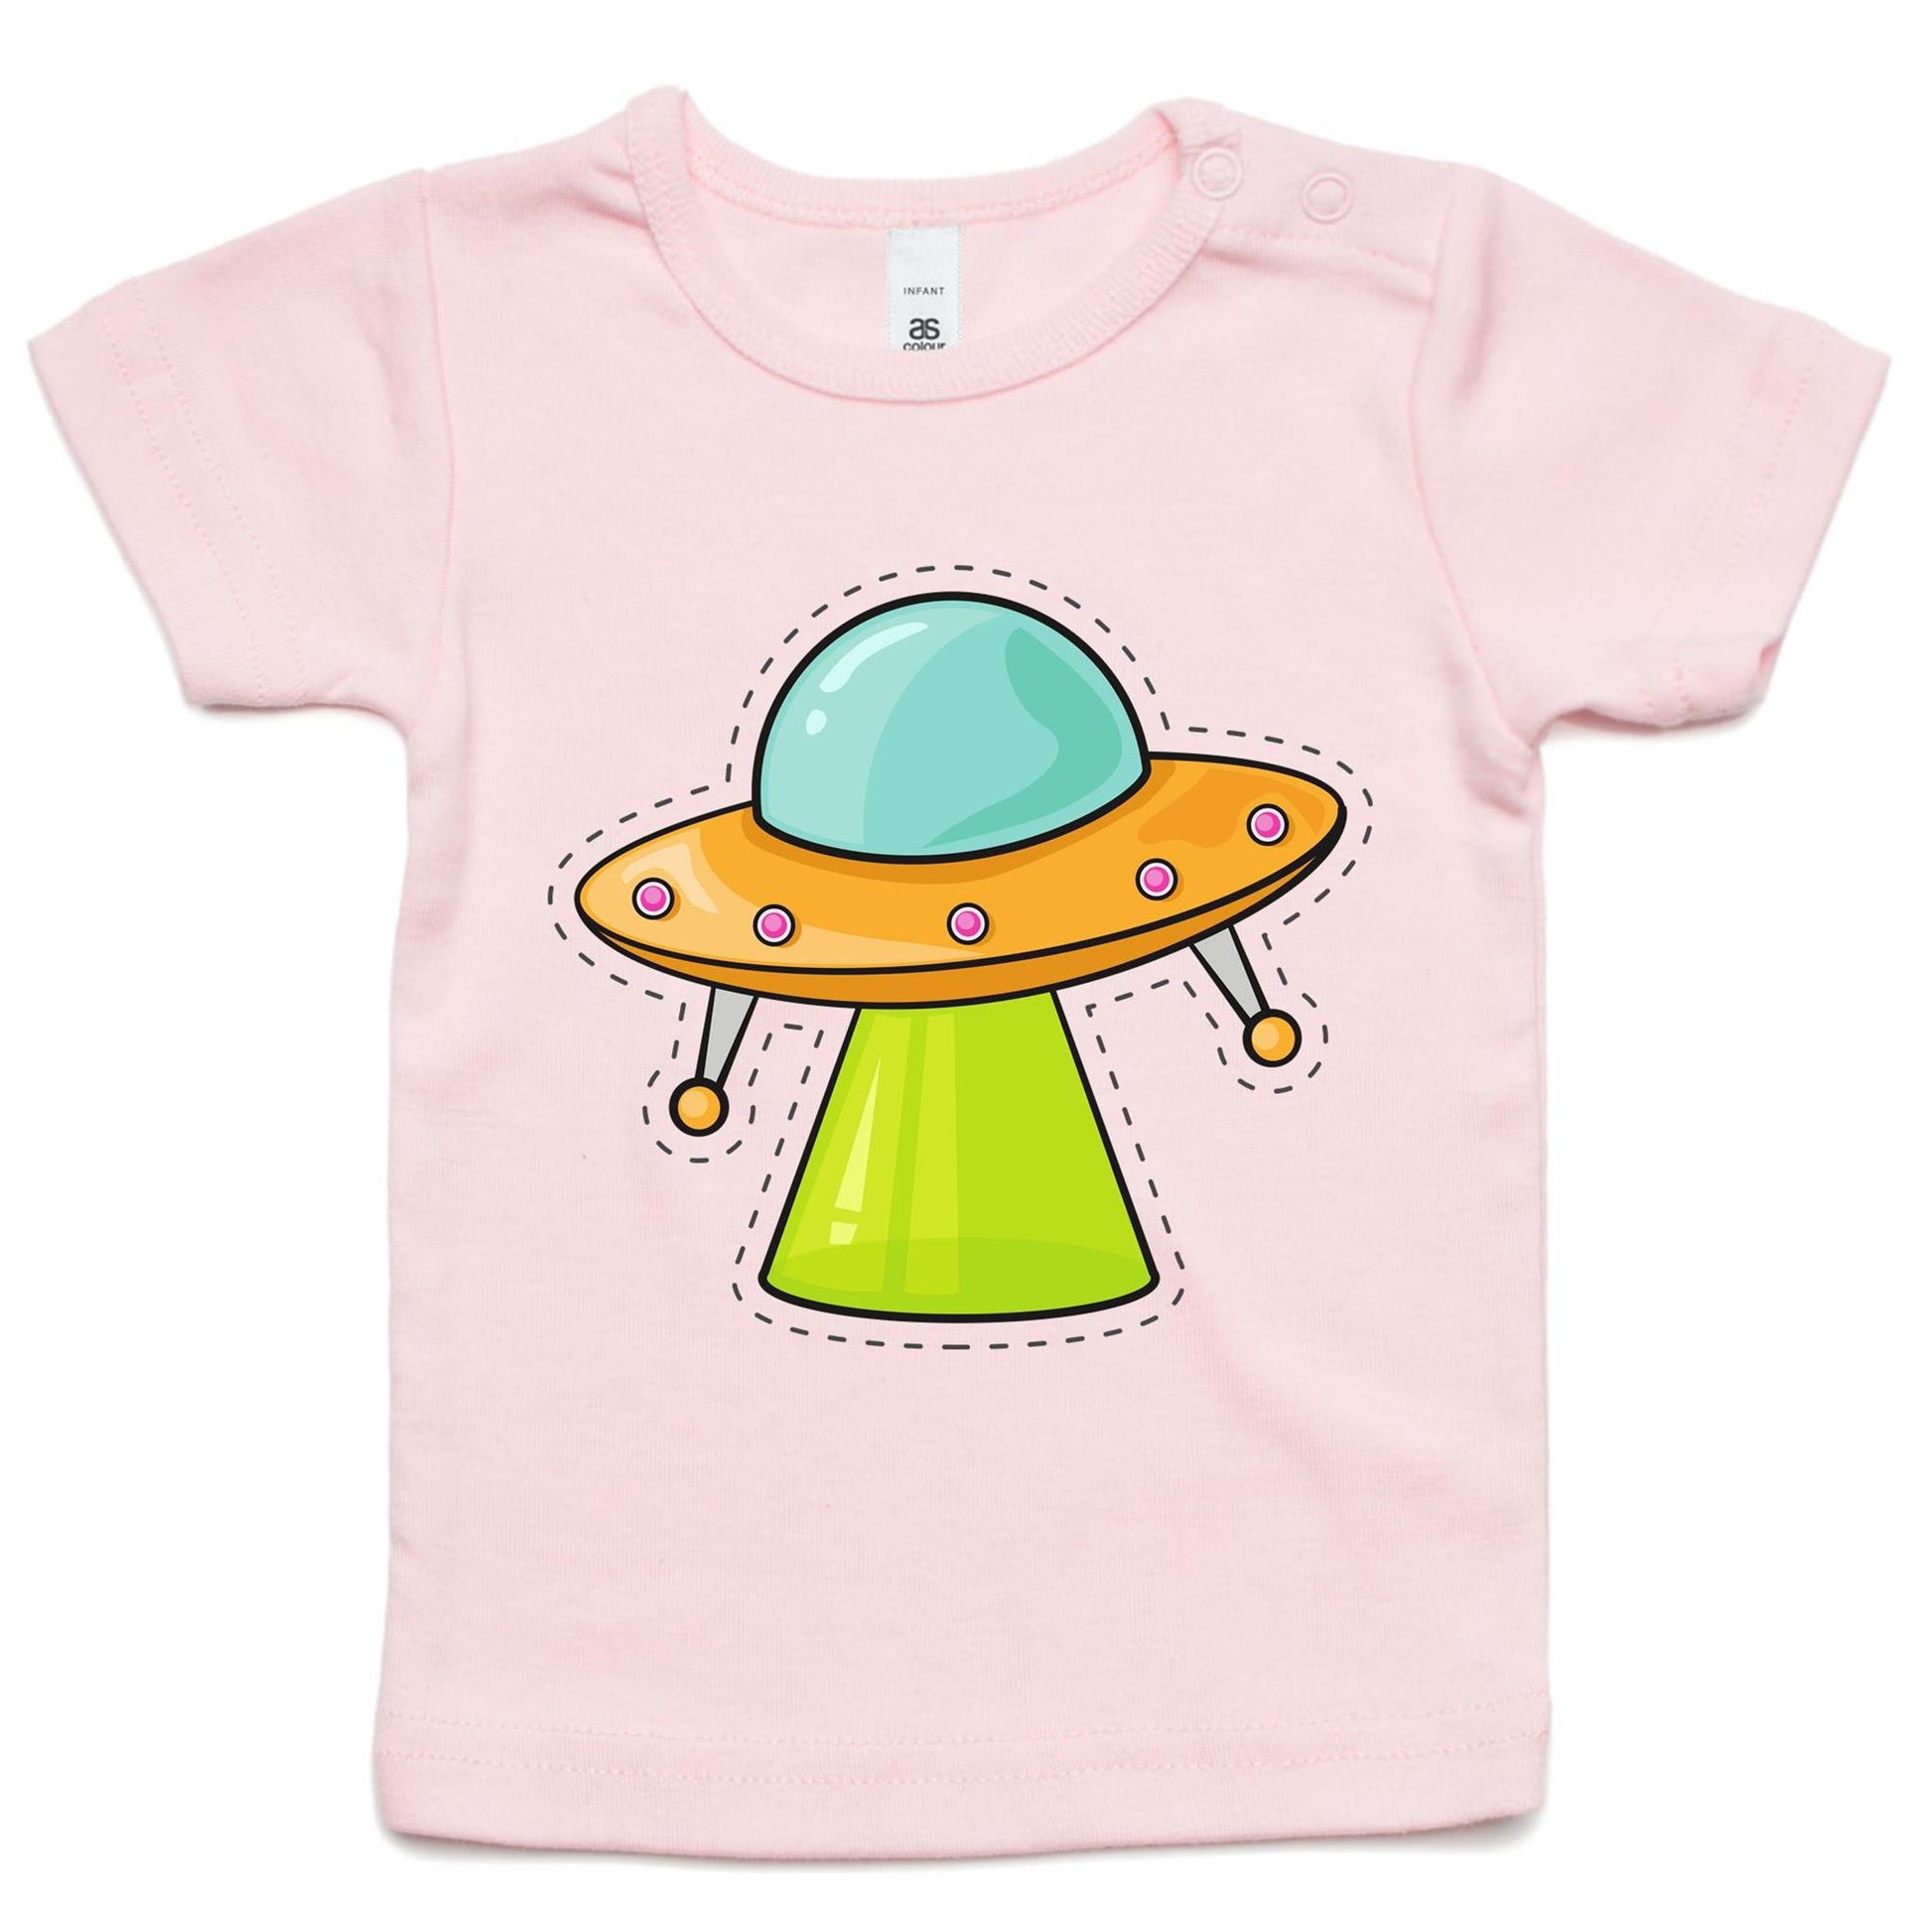 Alien UFO - Baby T-shirt Pink Baby T-shirt kids Retro Sci Fi Space